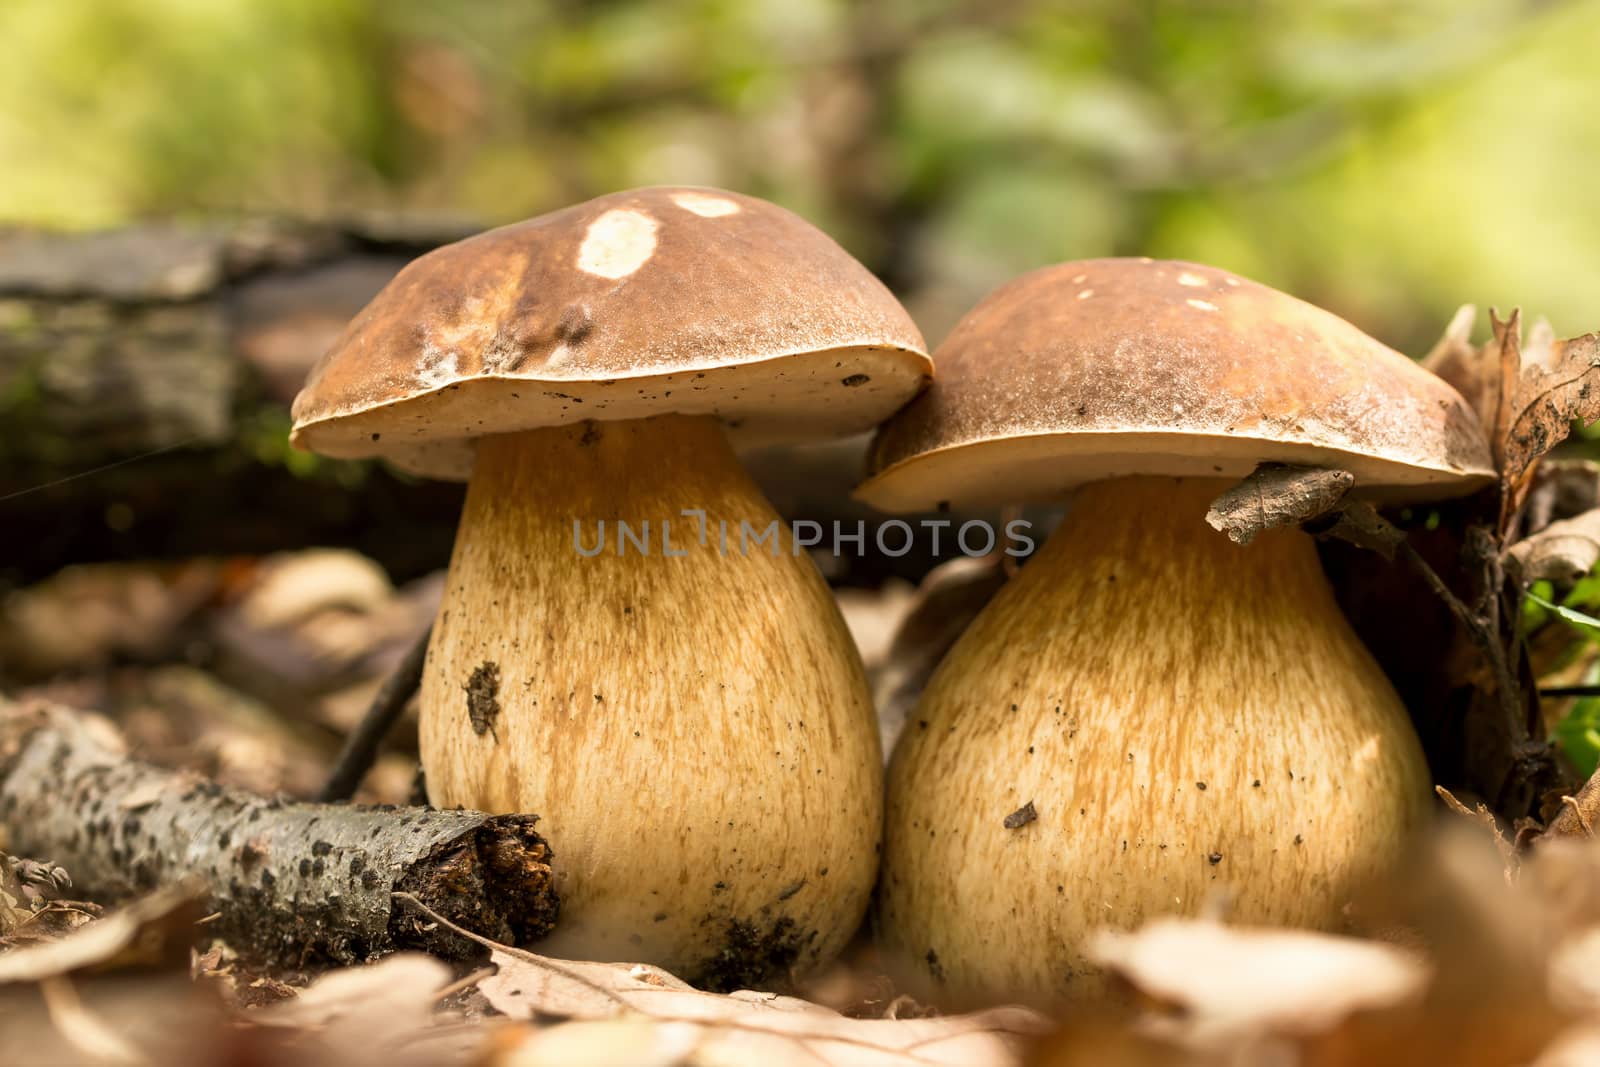 Porcini fungi on the litter (Boletus edulis)